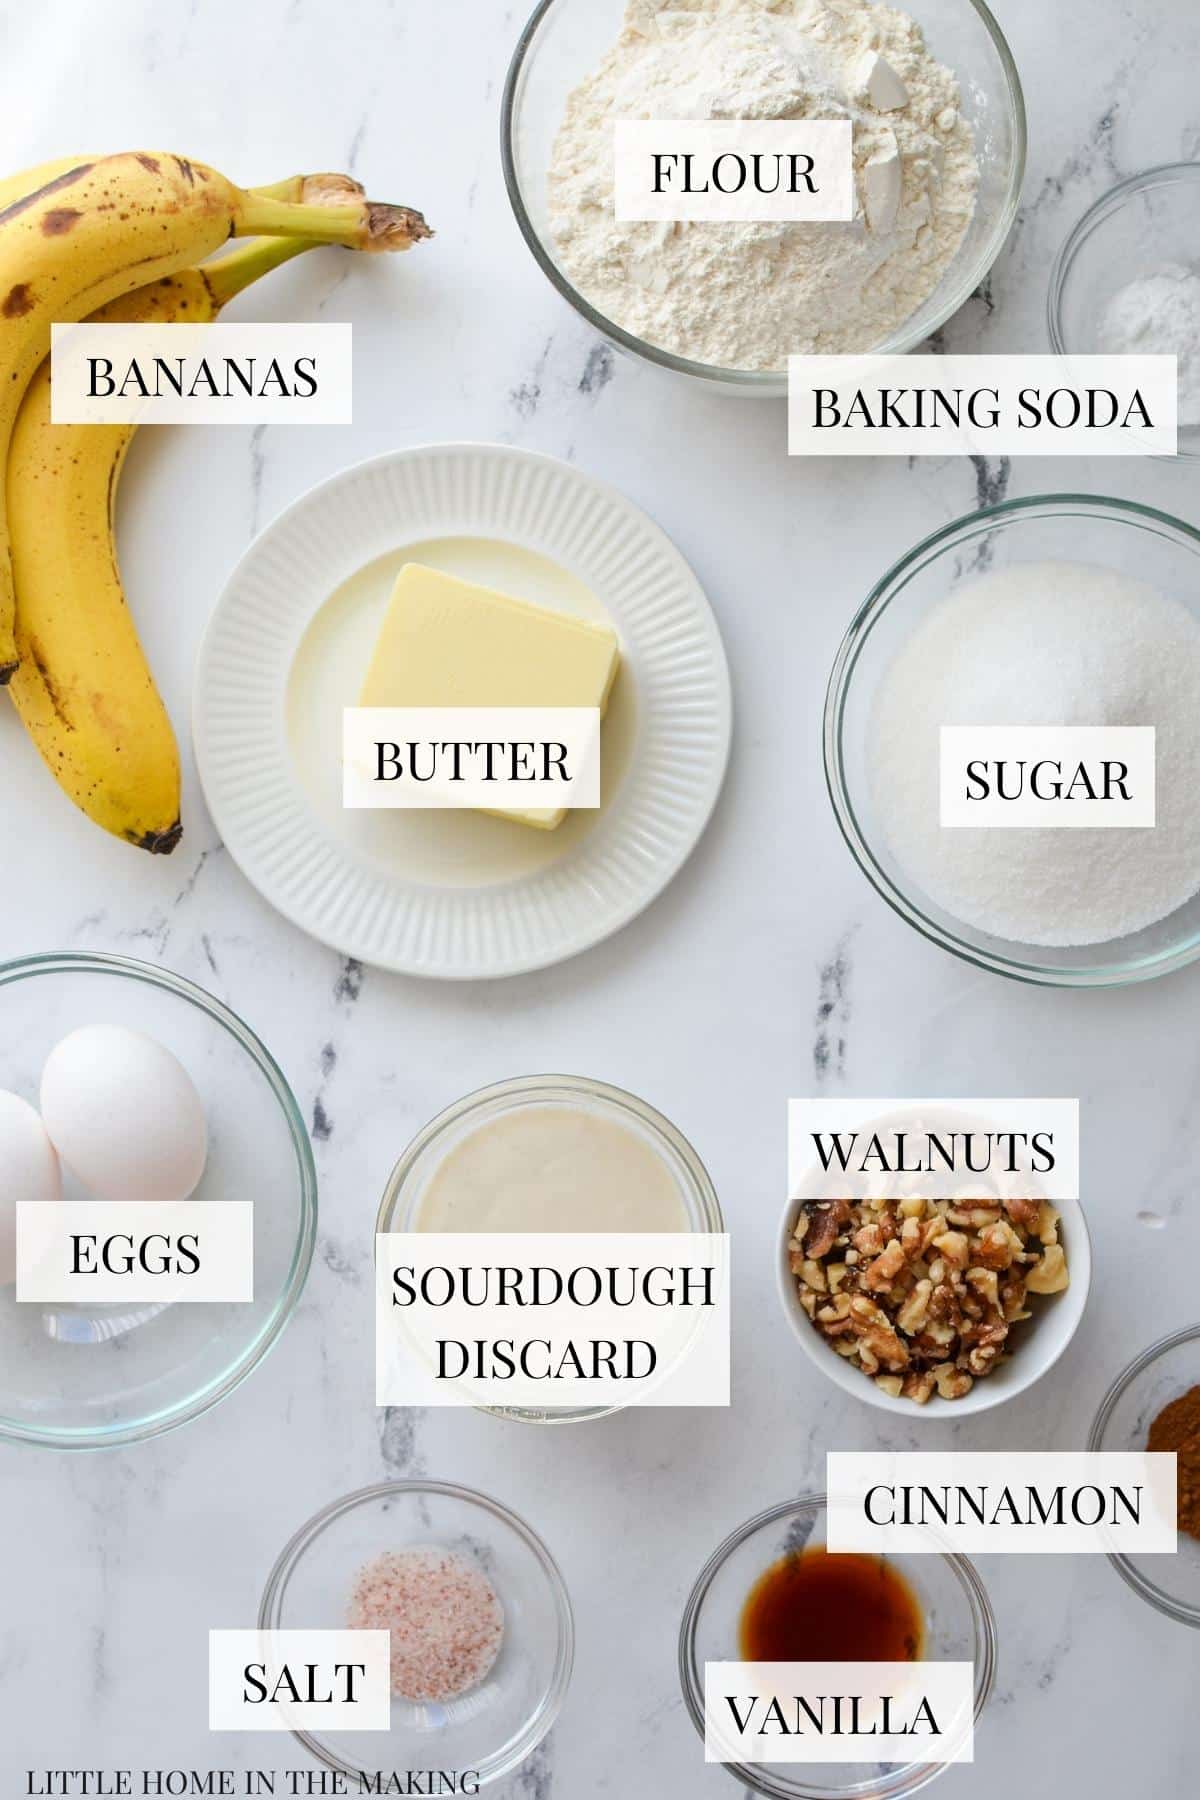 The ingredients needed to make sourdough banana bread, including ripe bananas, sugar, flour, and sourdough discard.